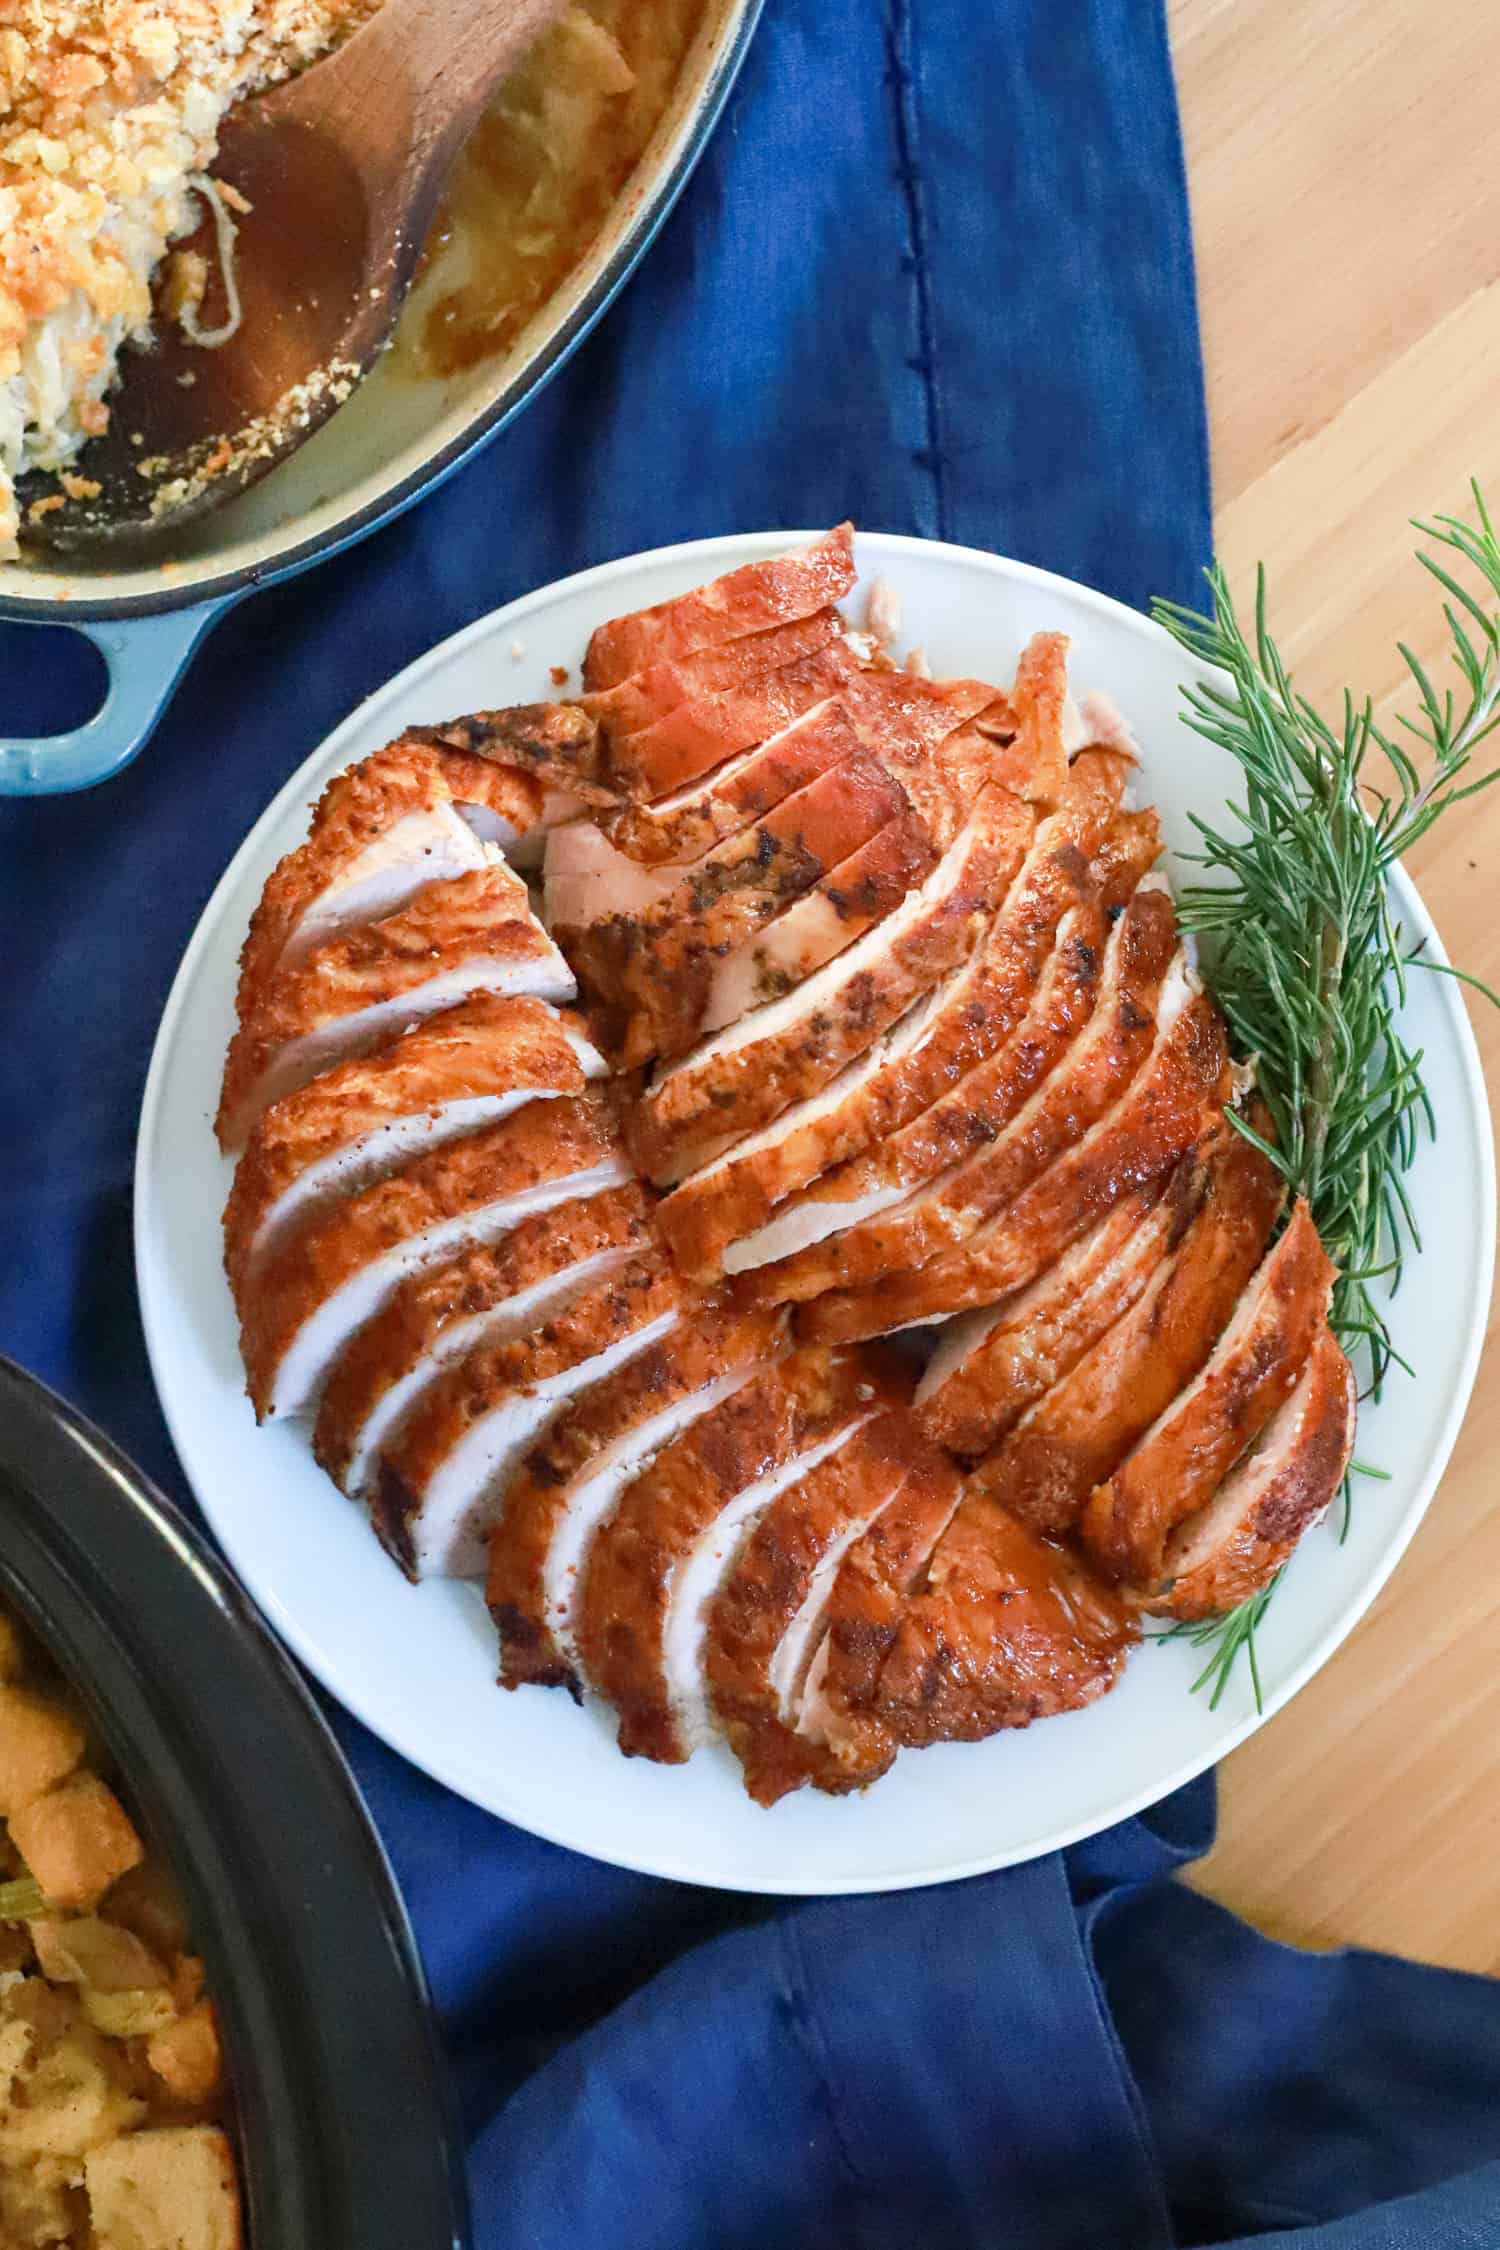 plate of sliced smoked turkey with rosemary garnish on navy blue napkin.